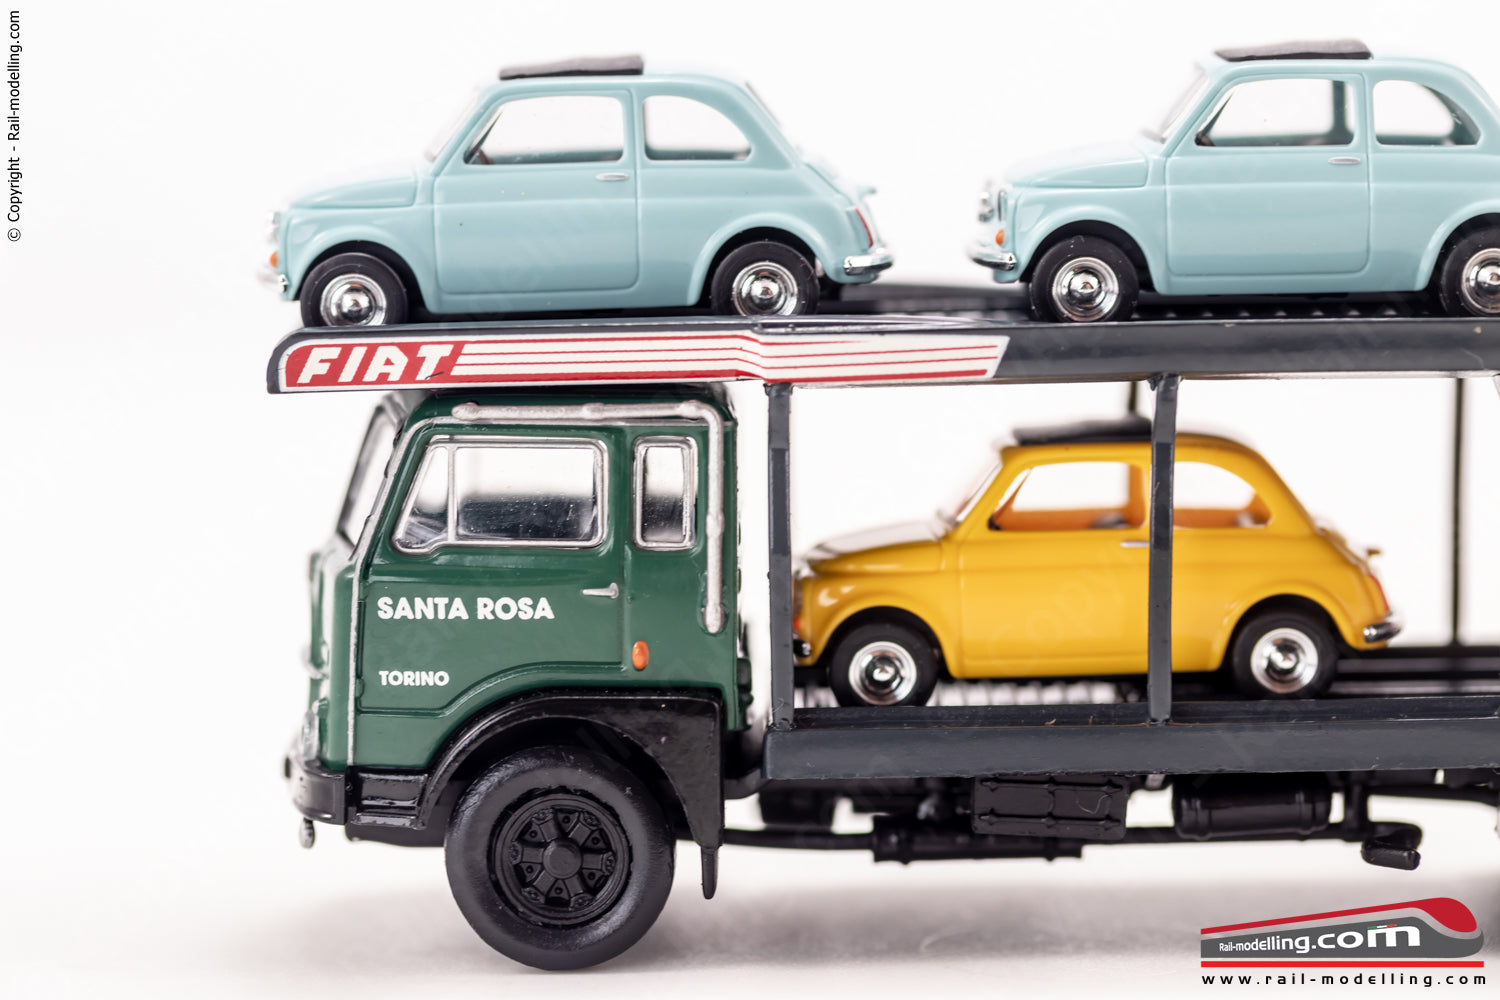 BREKINA 58482 - H0 1:87 - Camion bisarca Fiat 642 verde "Santa Rosa" + 6 vetture Fiat 500